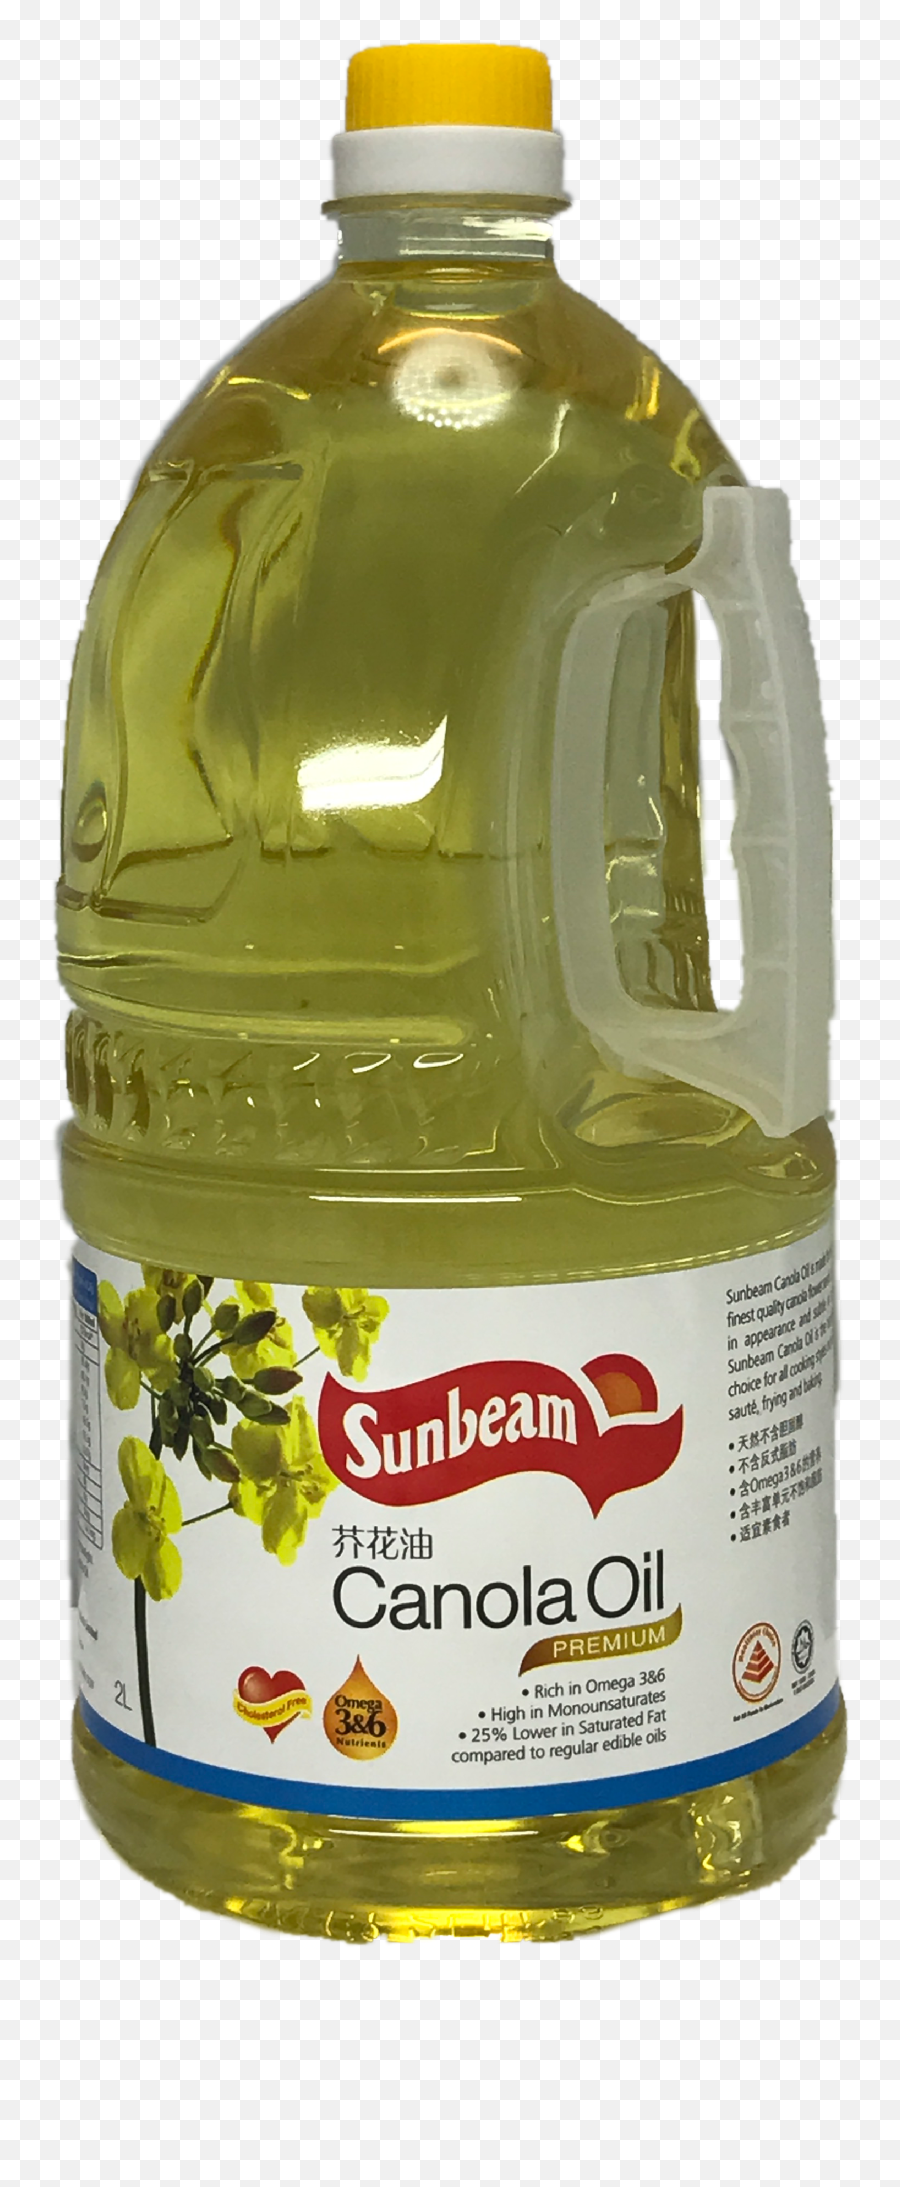 Download Hd Sunbeam Canola Oil 2l - Canola Oil Transparent Sunbeam Png,Sunbeam Png